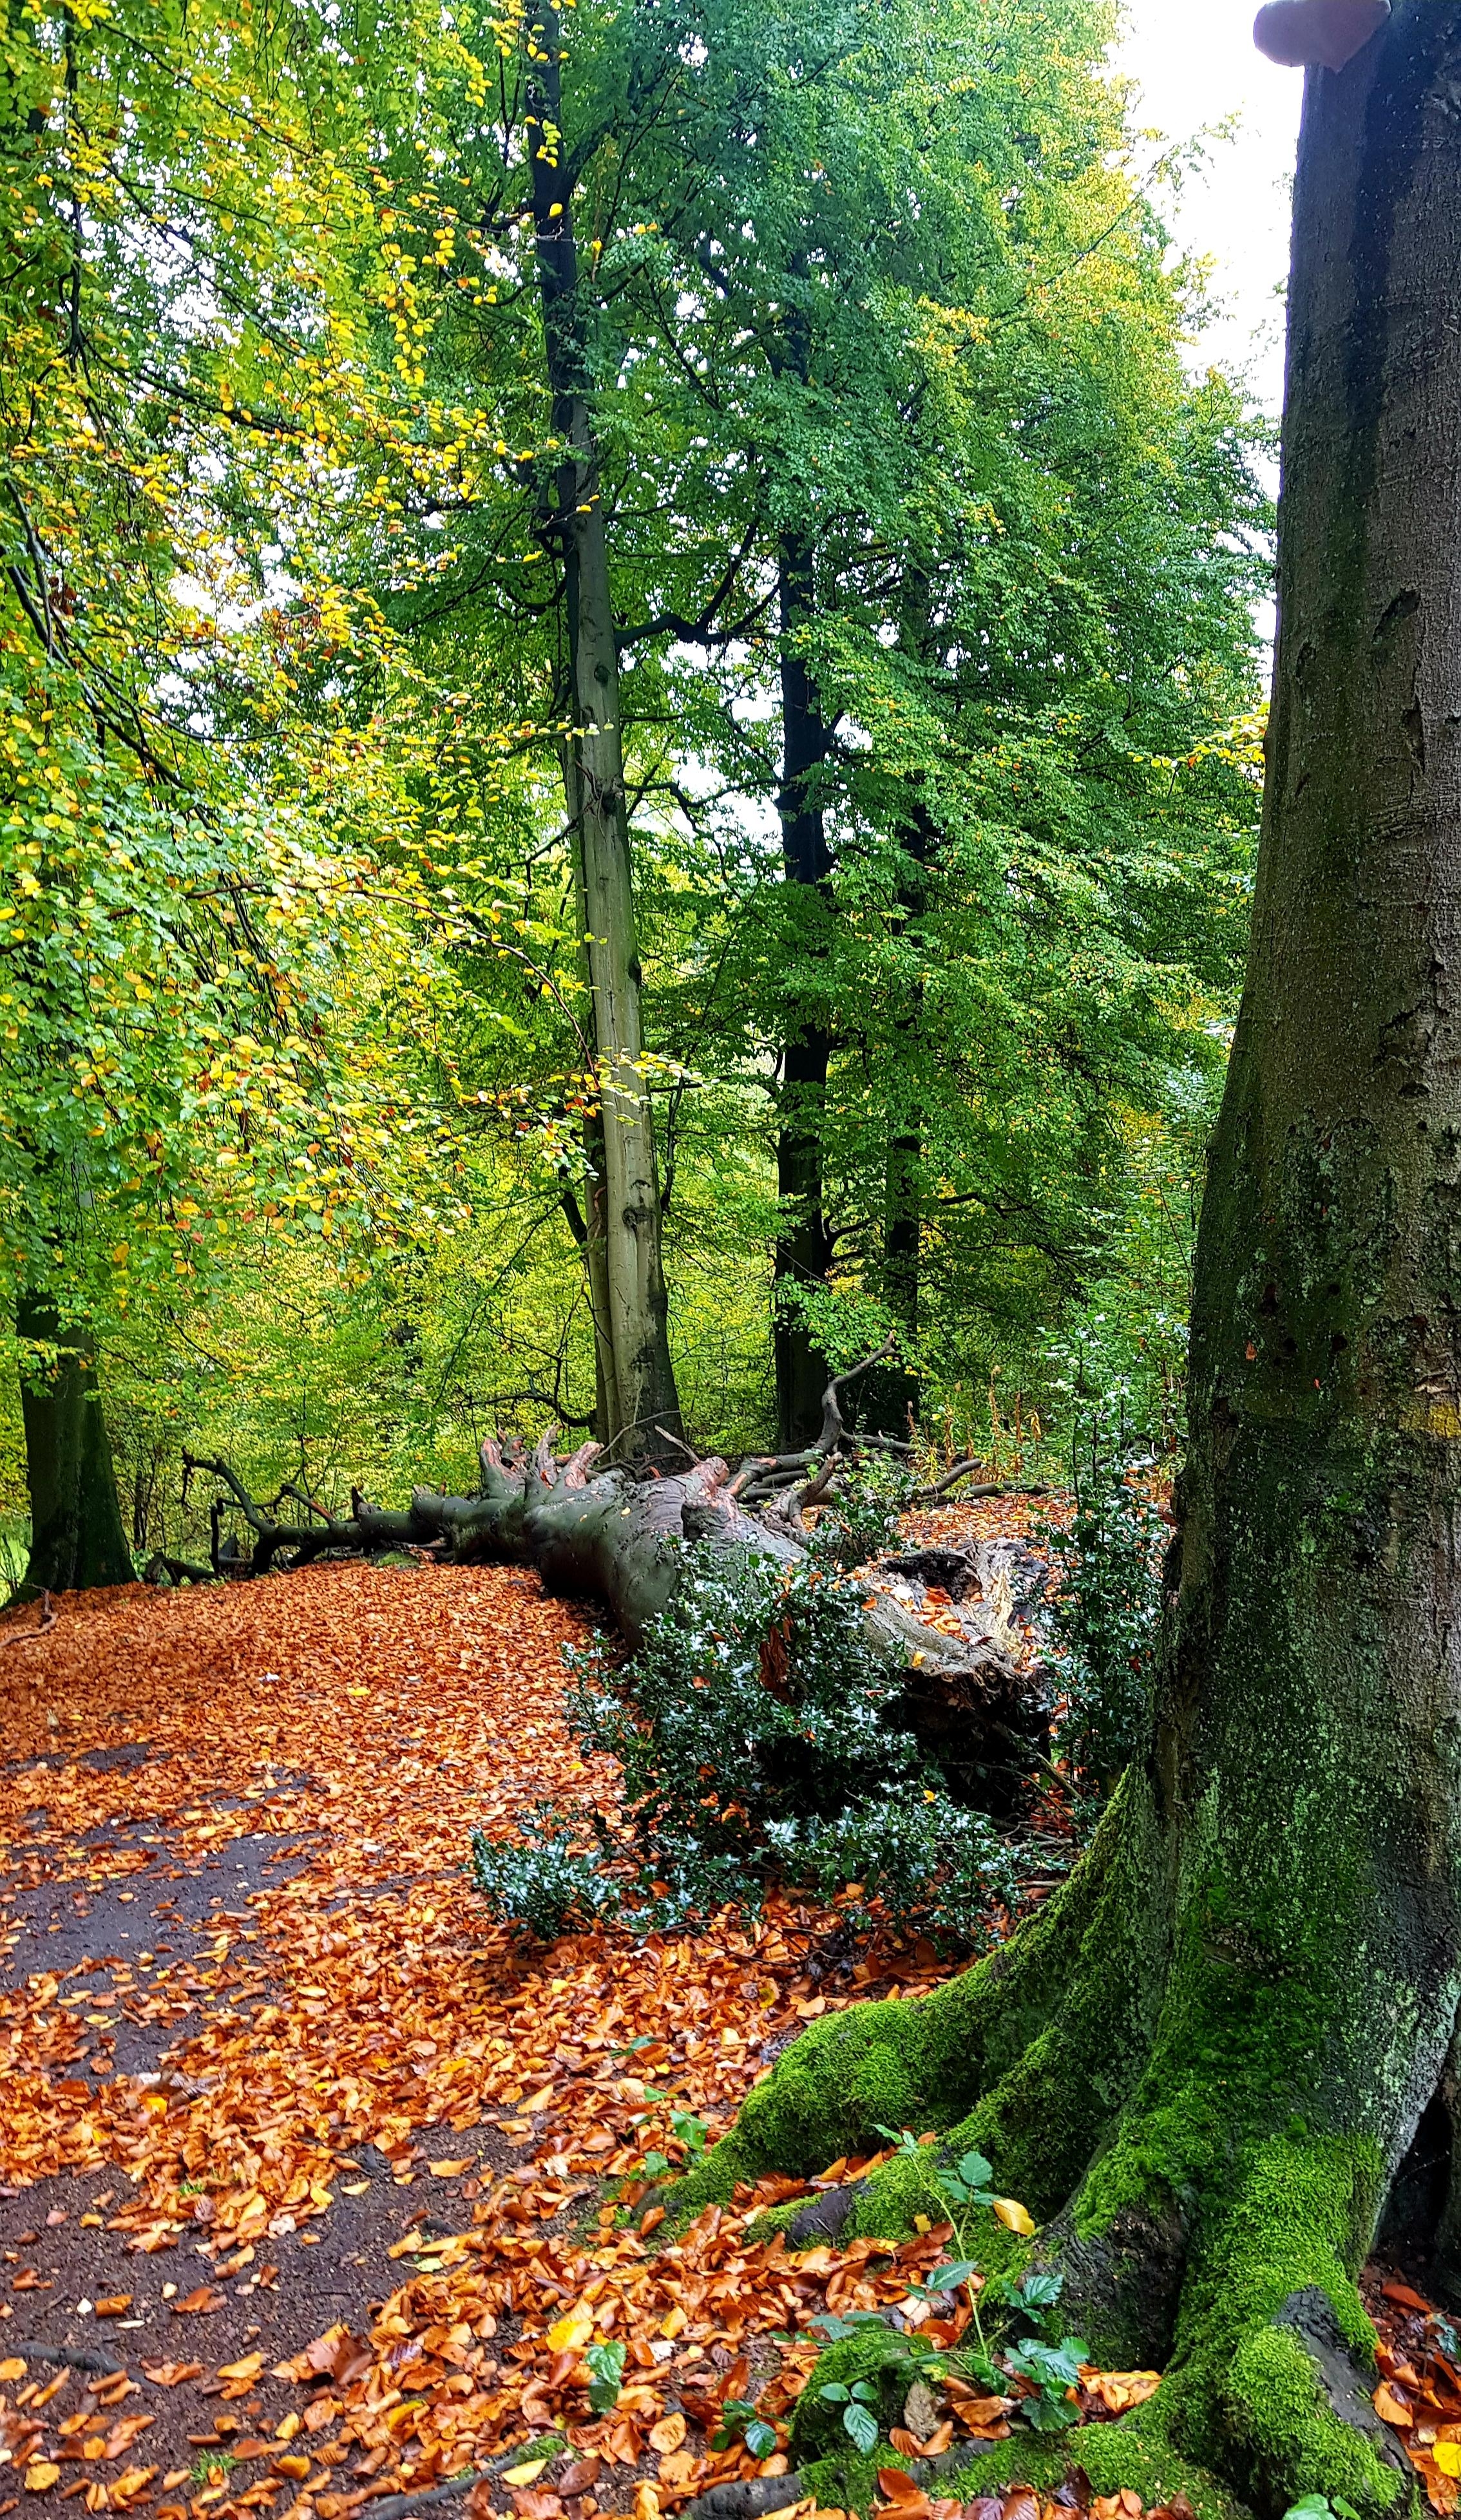 Herbst
#herbst#natur#wald